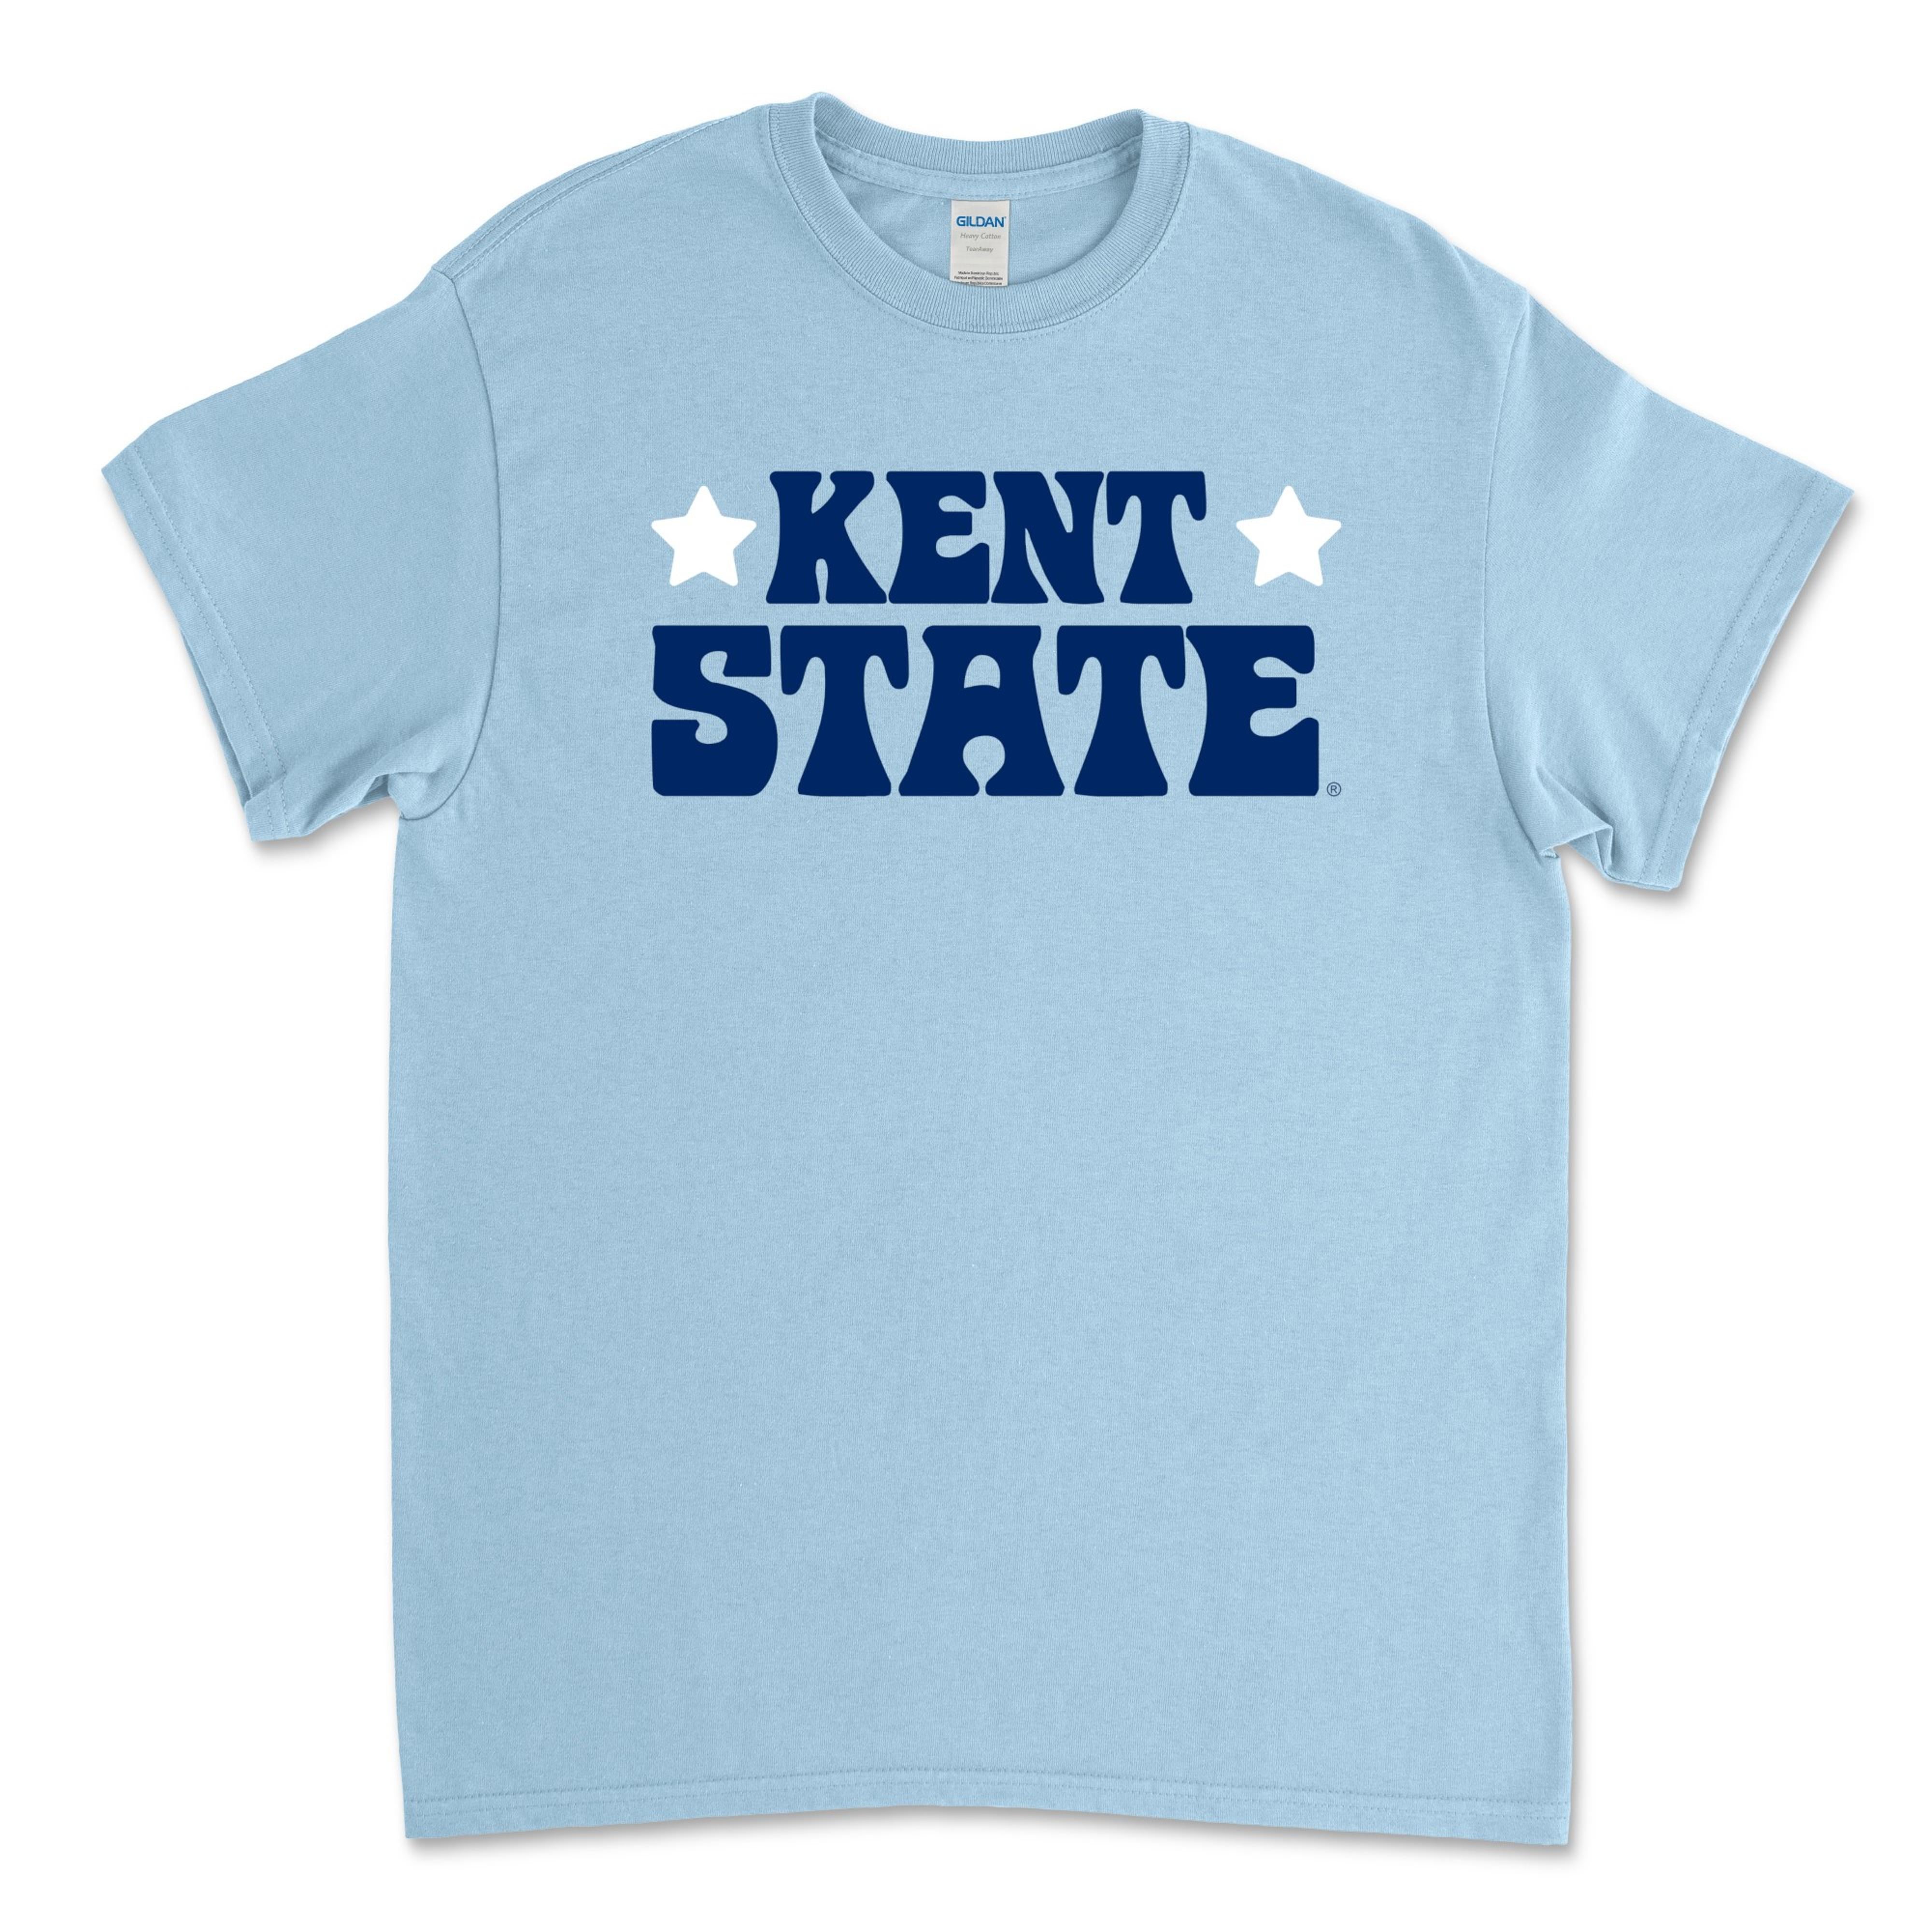 Kent State Light Blue With Stars T-Shirt